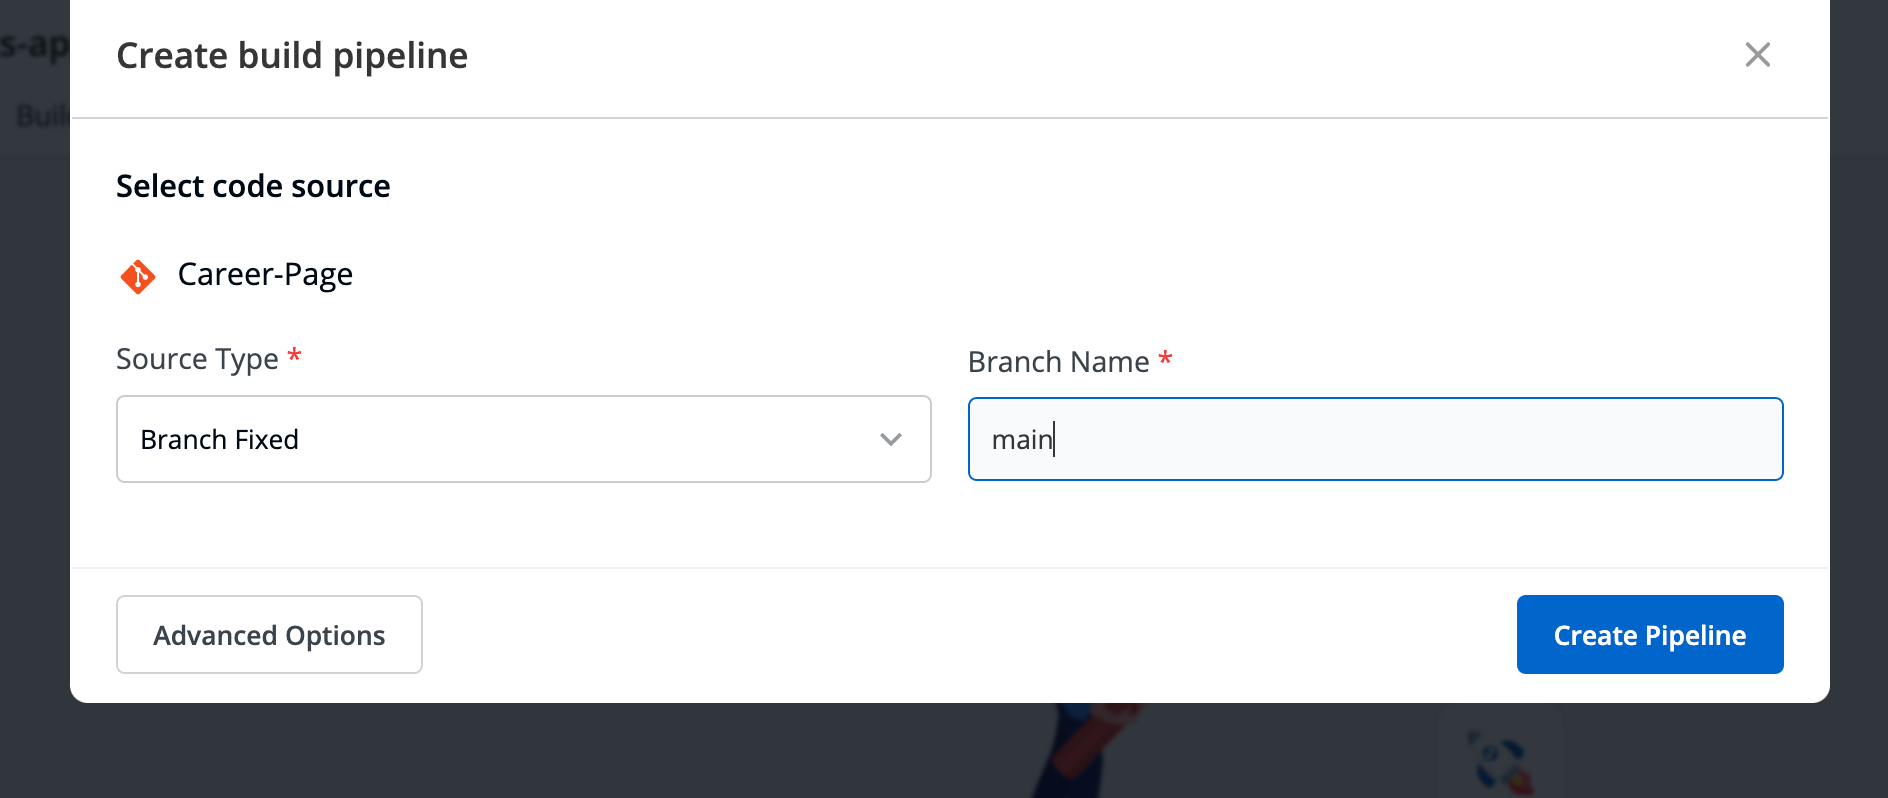 Add Branch Name